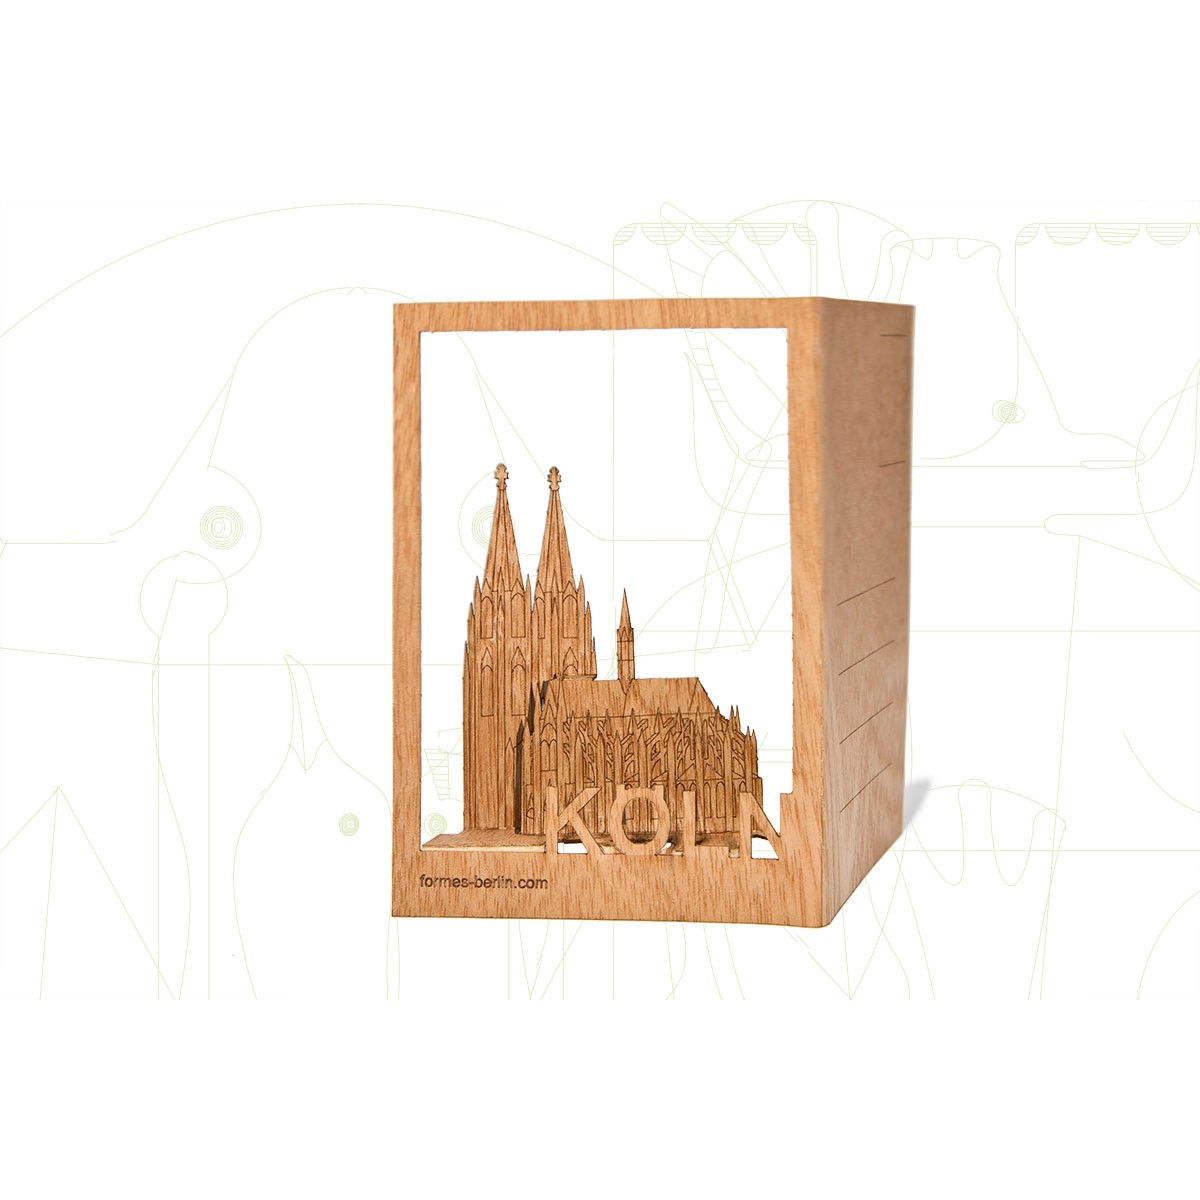 formes Berlin Köln-Karten - 6 Postkarten aus Holz